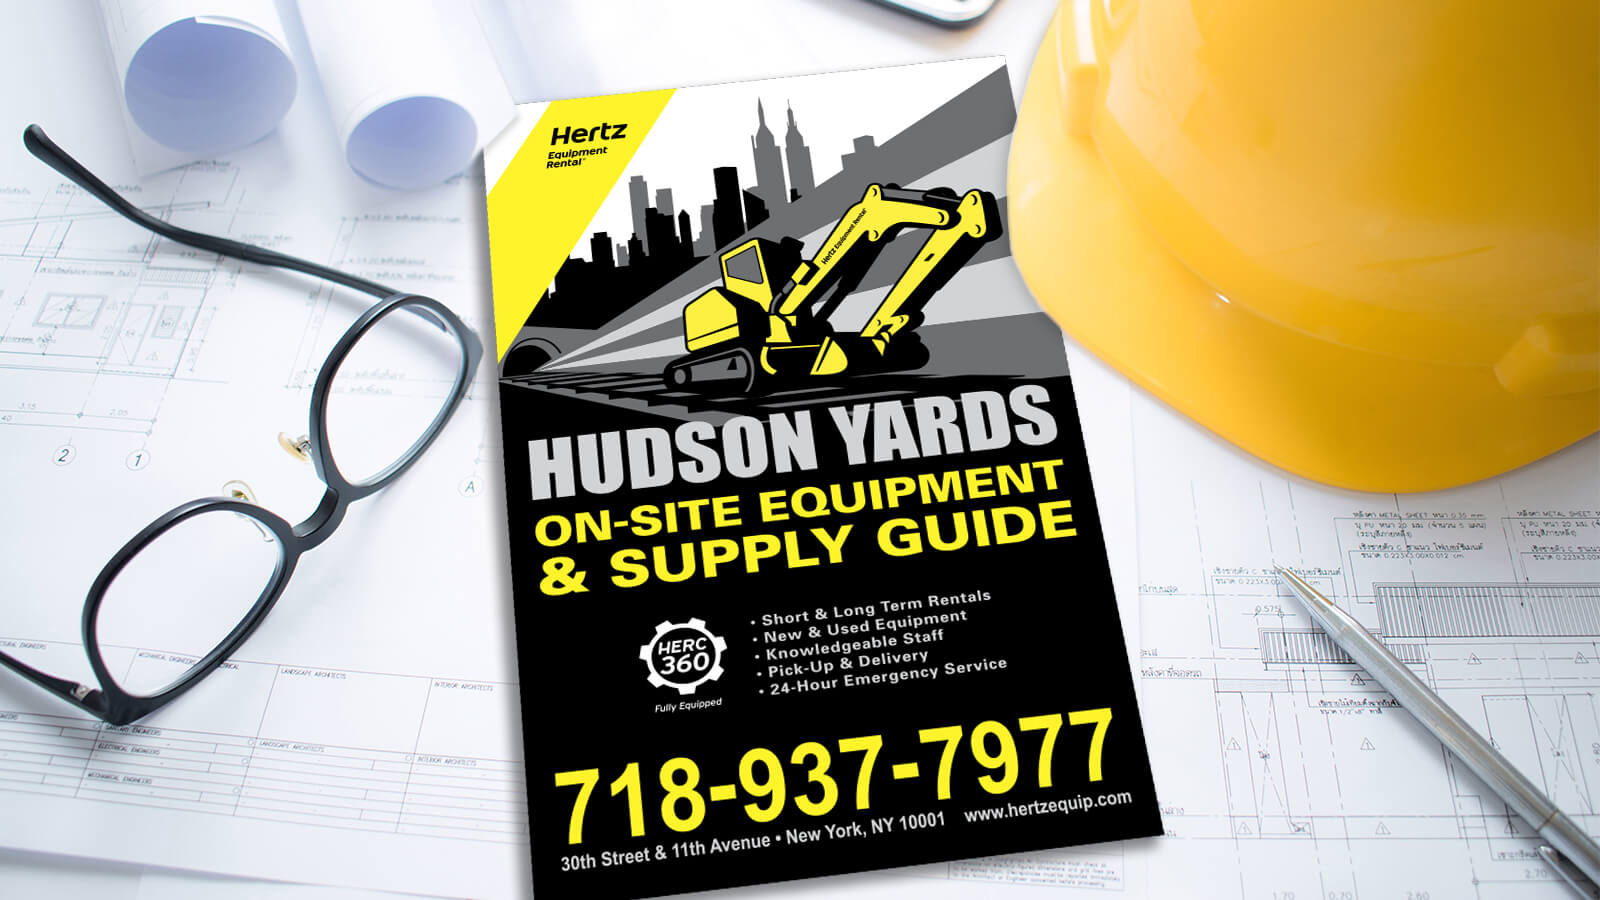 Hertz Brochure "Hudson Yards"